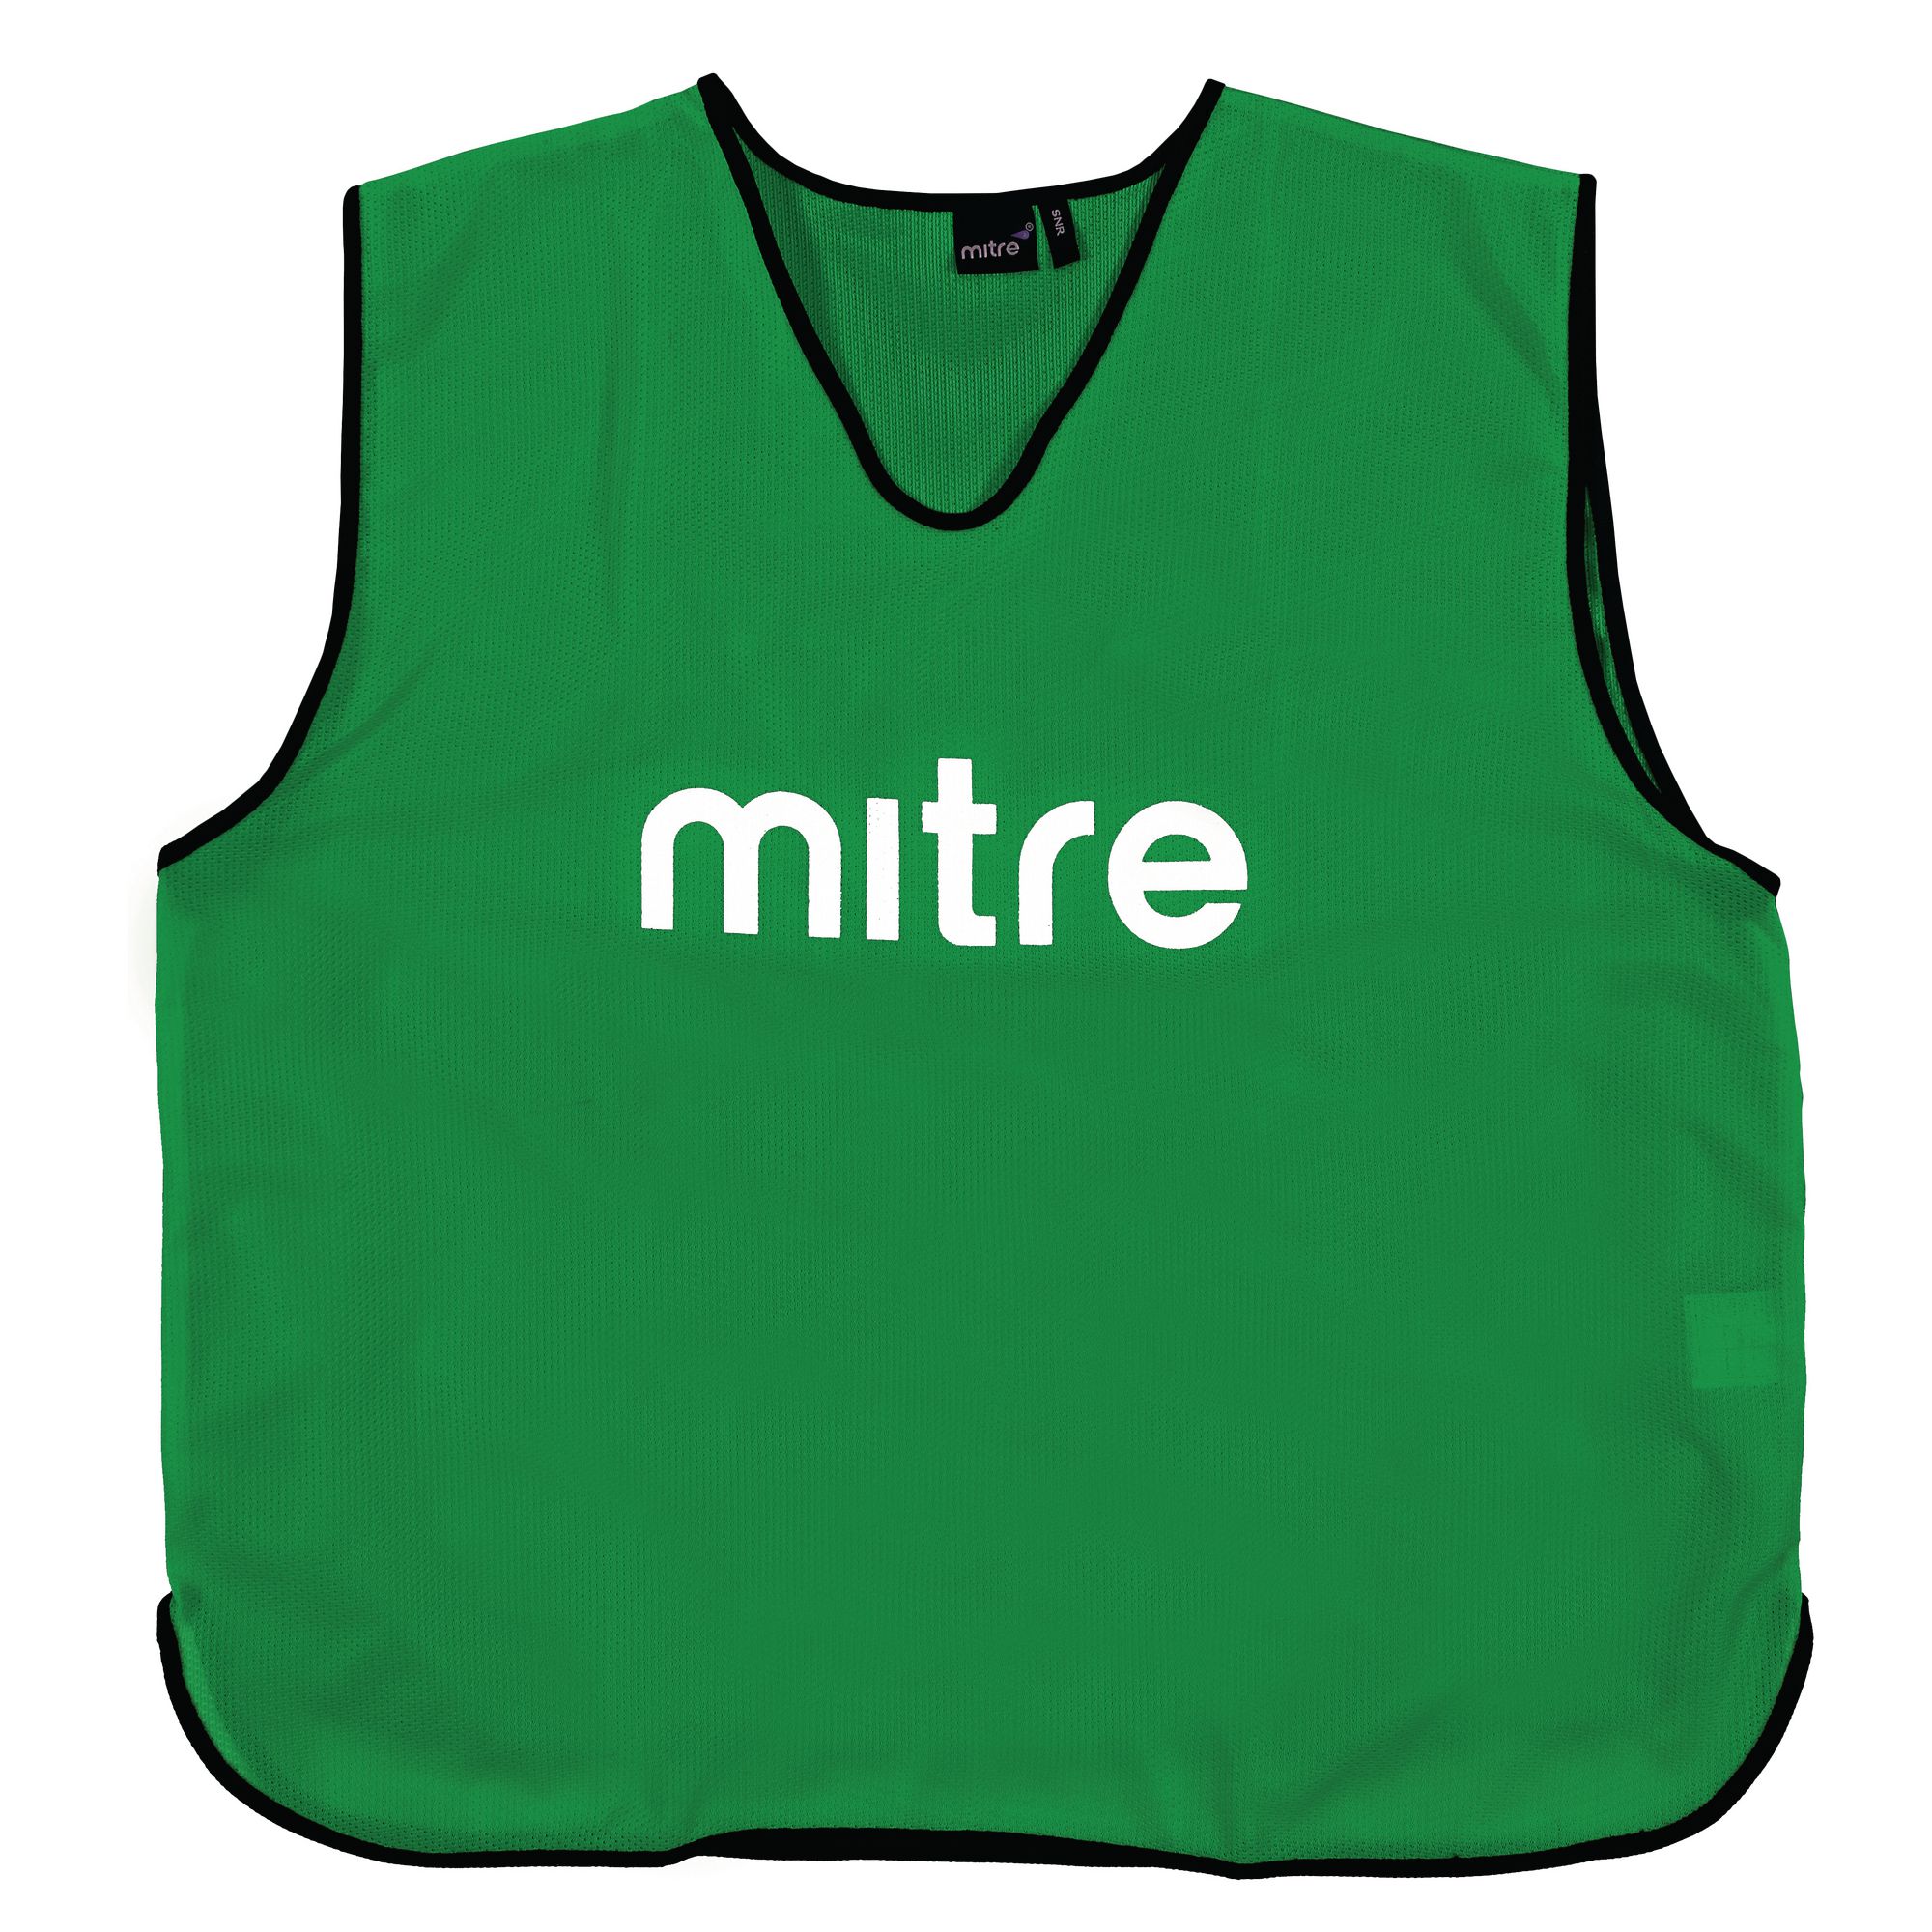 Mitre Training Bib Large Green/Black